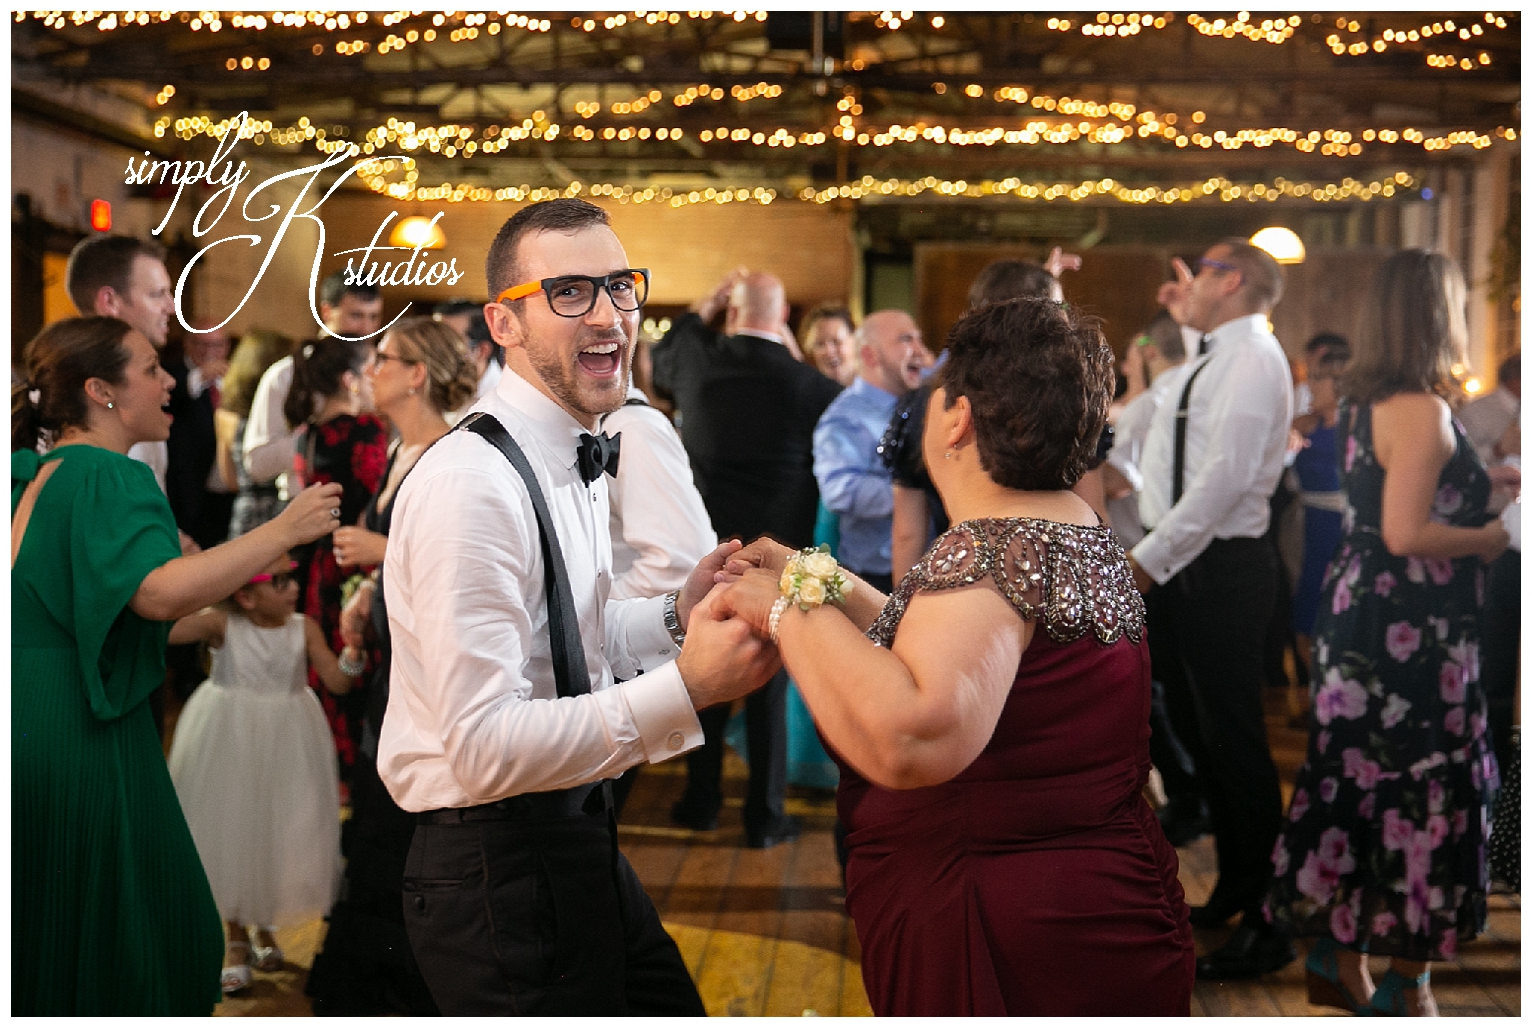 Dancing at a Wedding .jpg